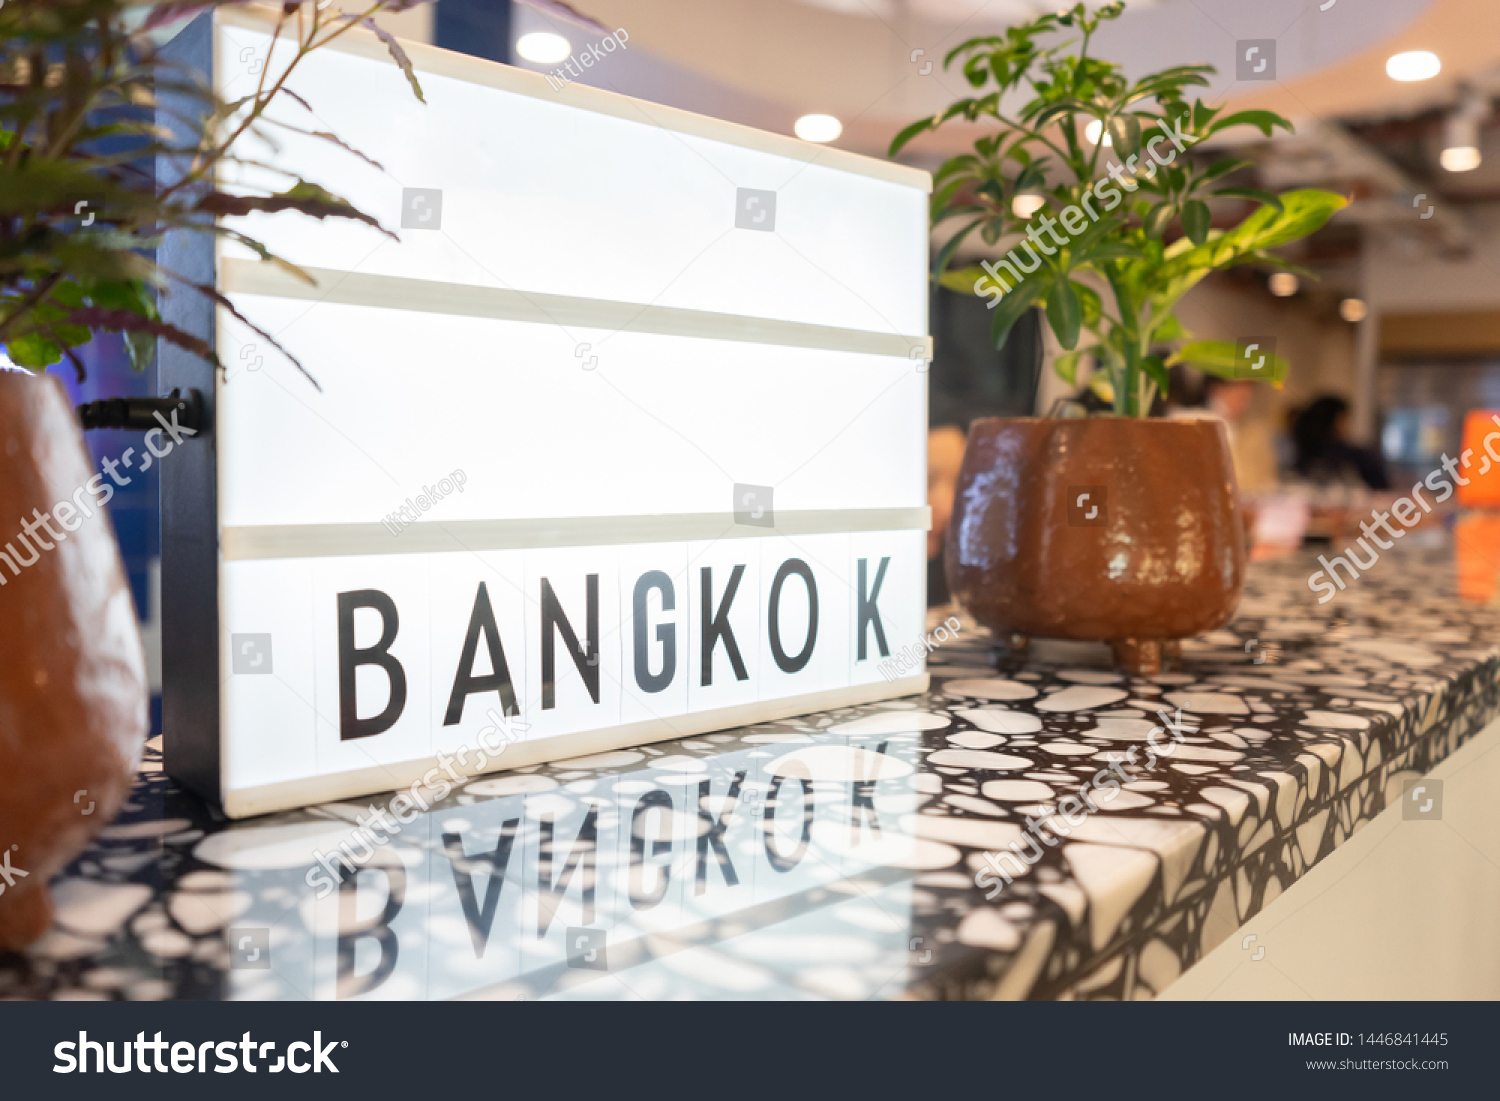 Bangkok advertiser board with light. #1446841445